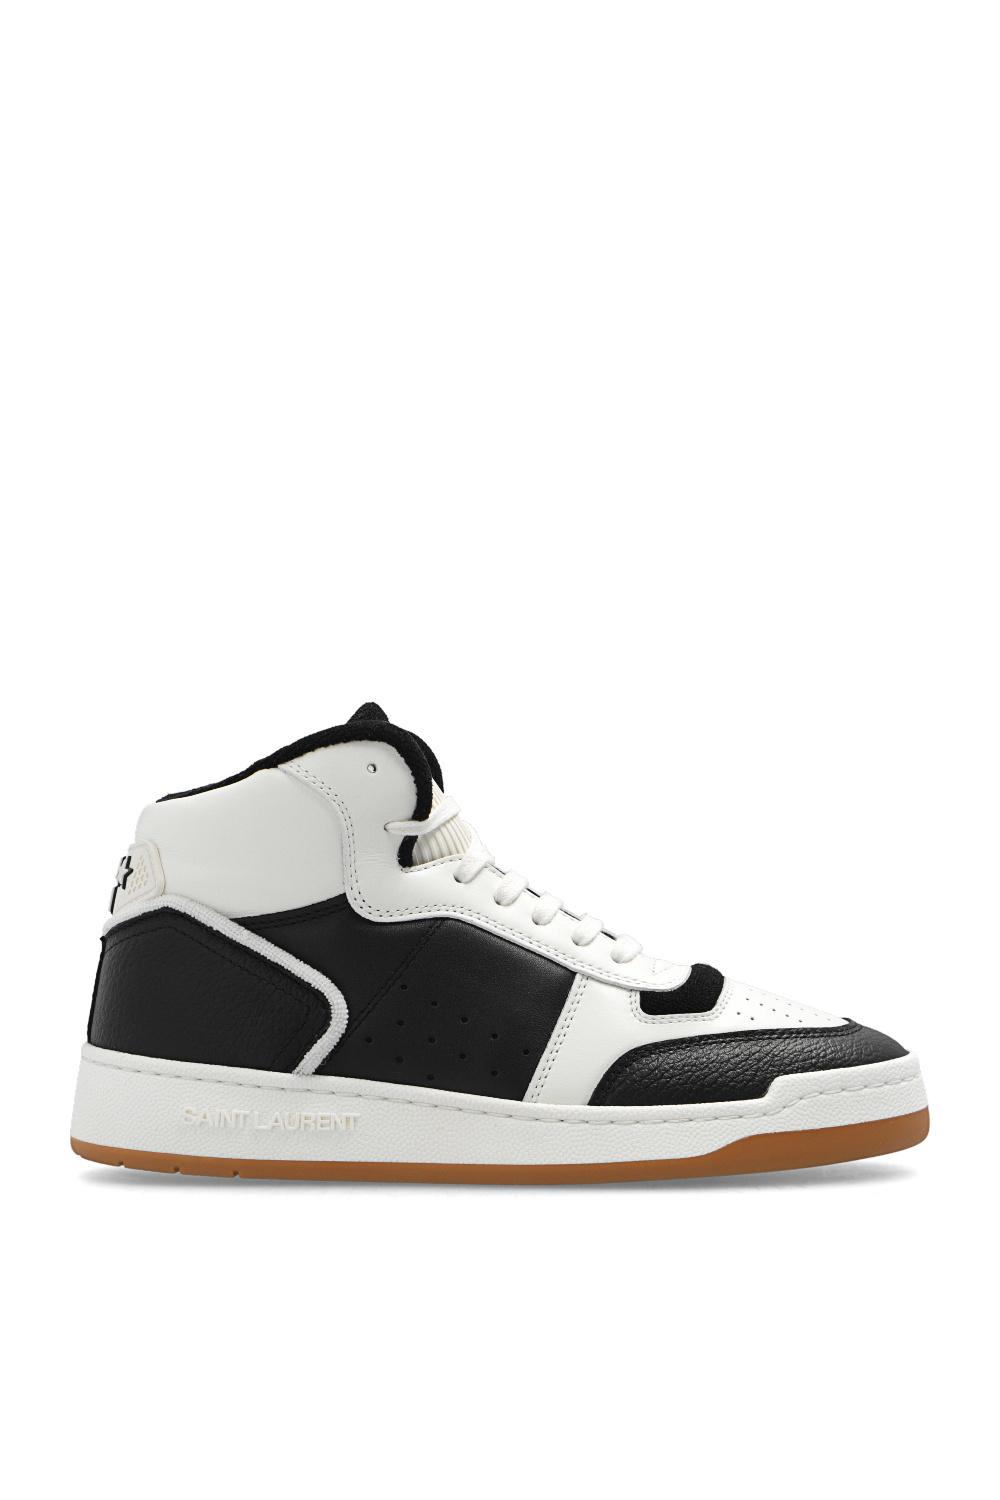 Saint Laurent 'sl/80' High-top Sneakers in White | Lyst